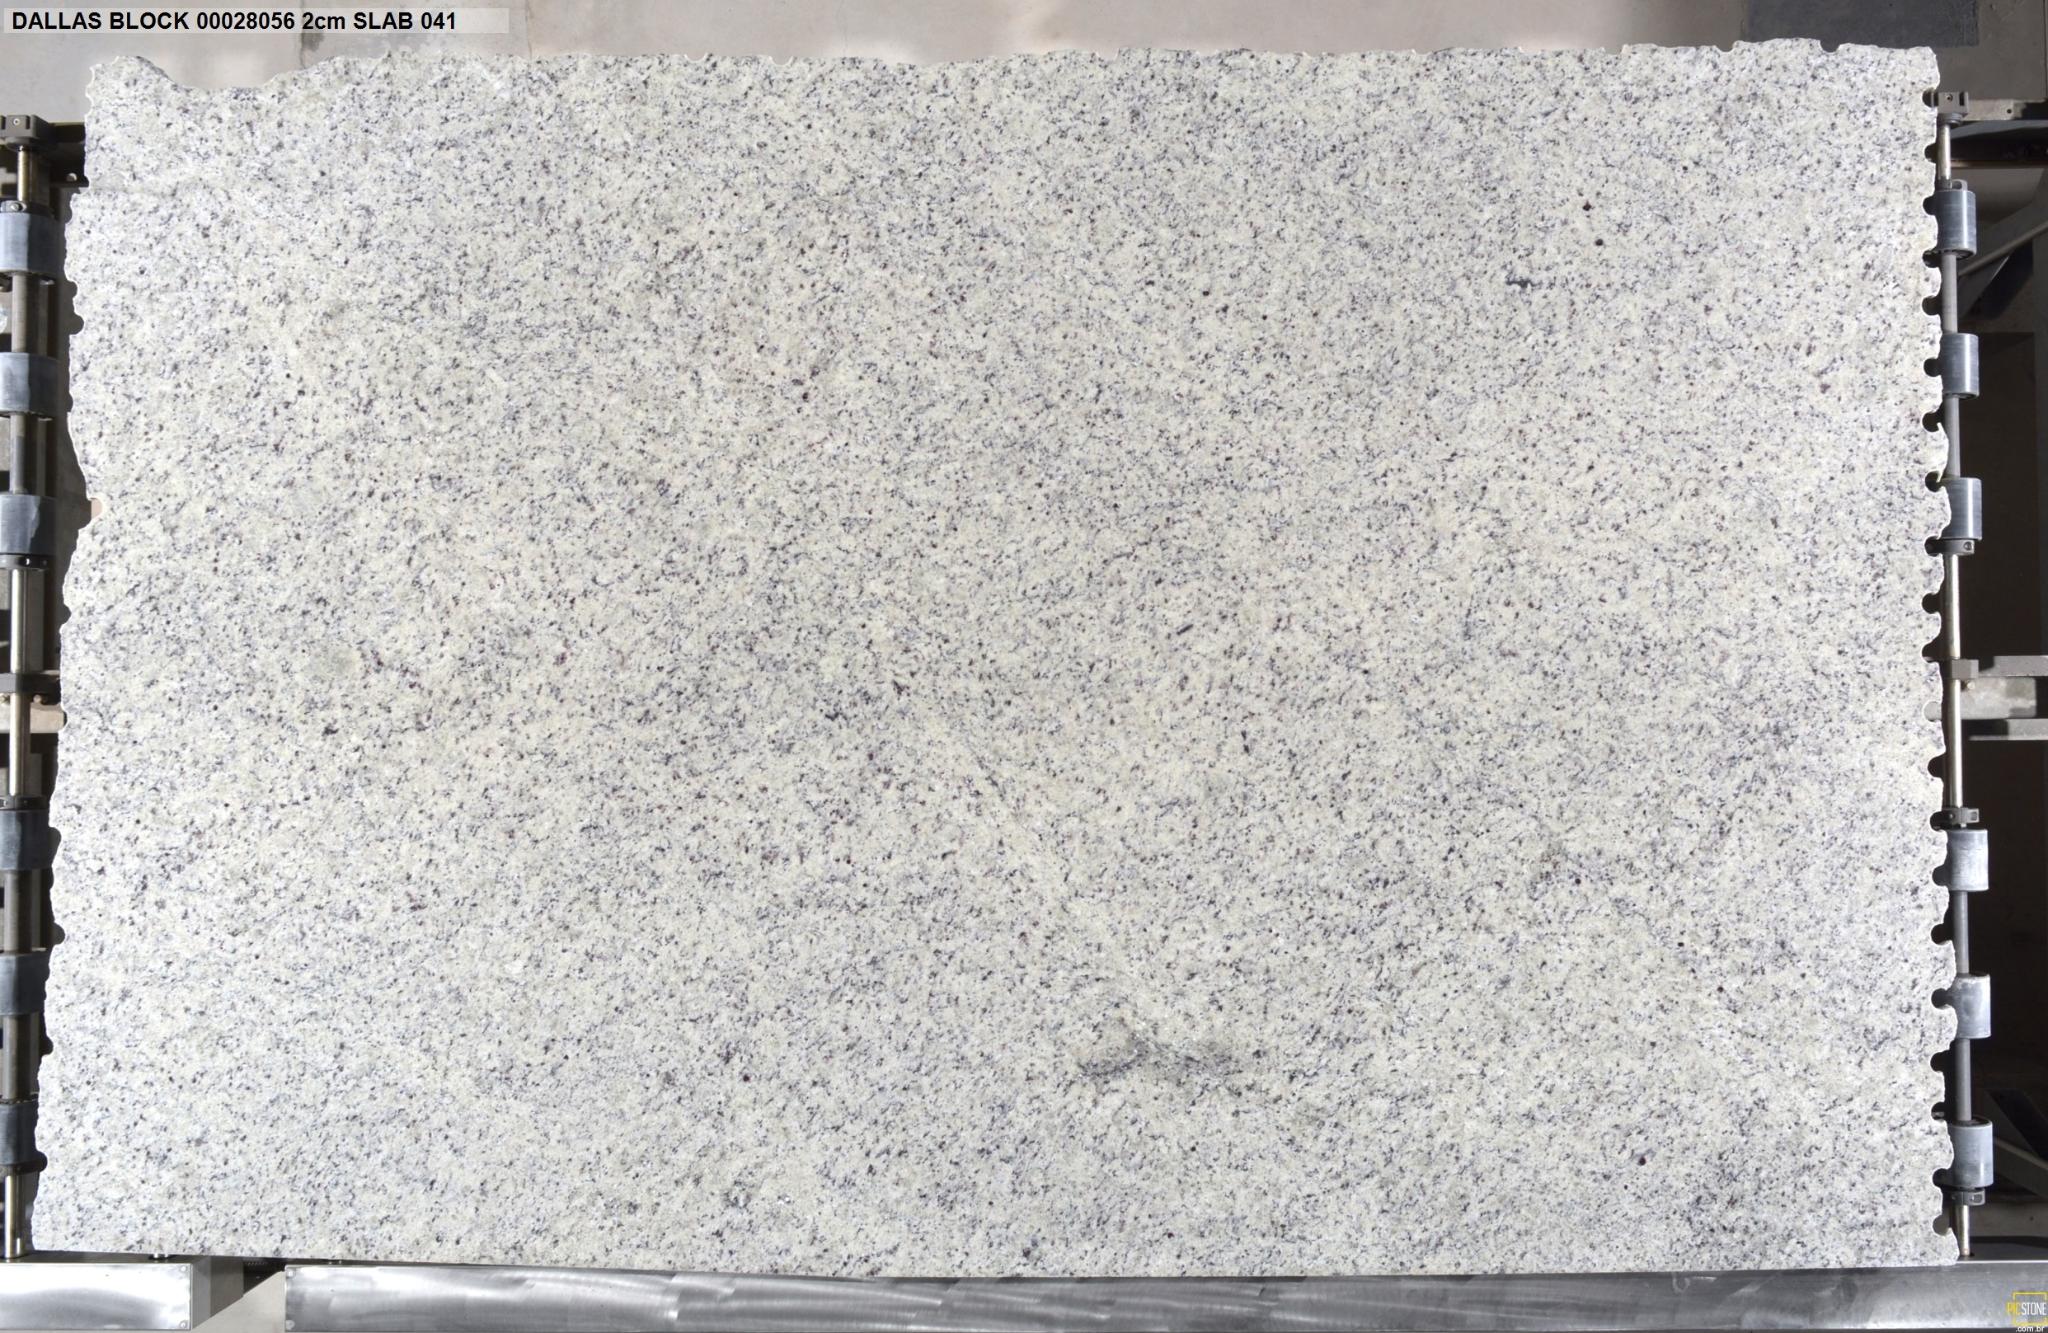 DALLAS Granite Polished Slab